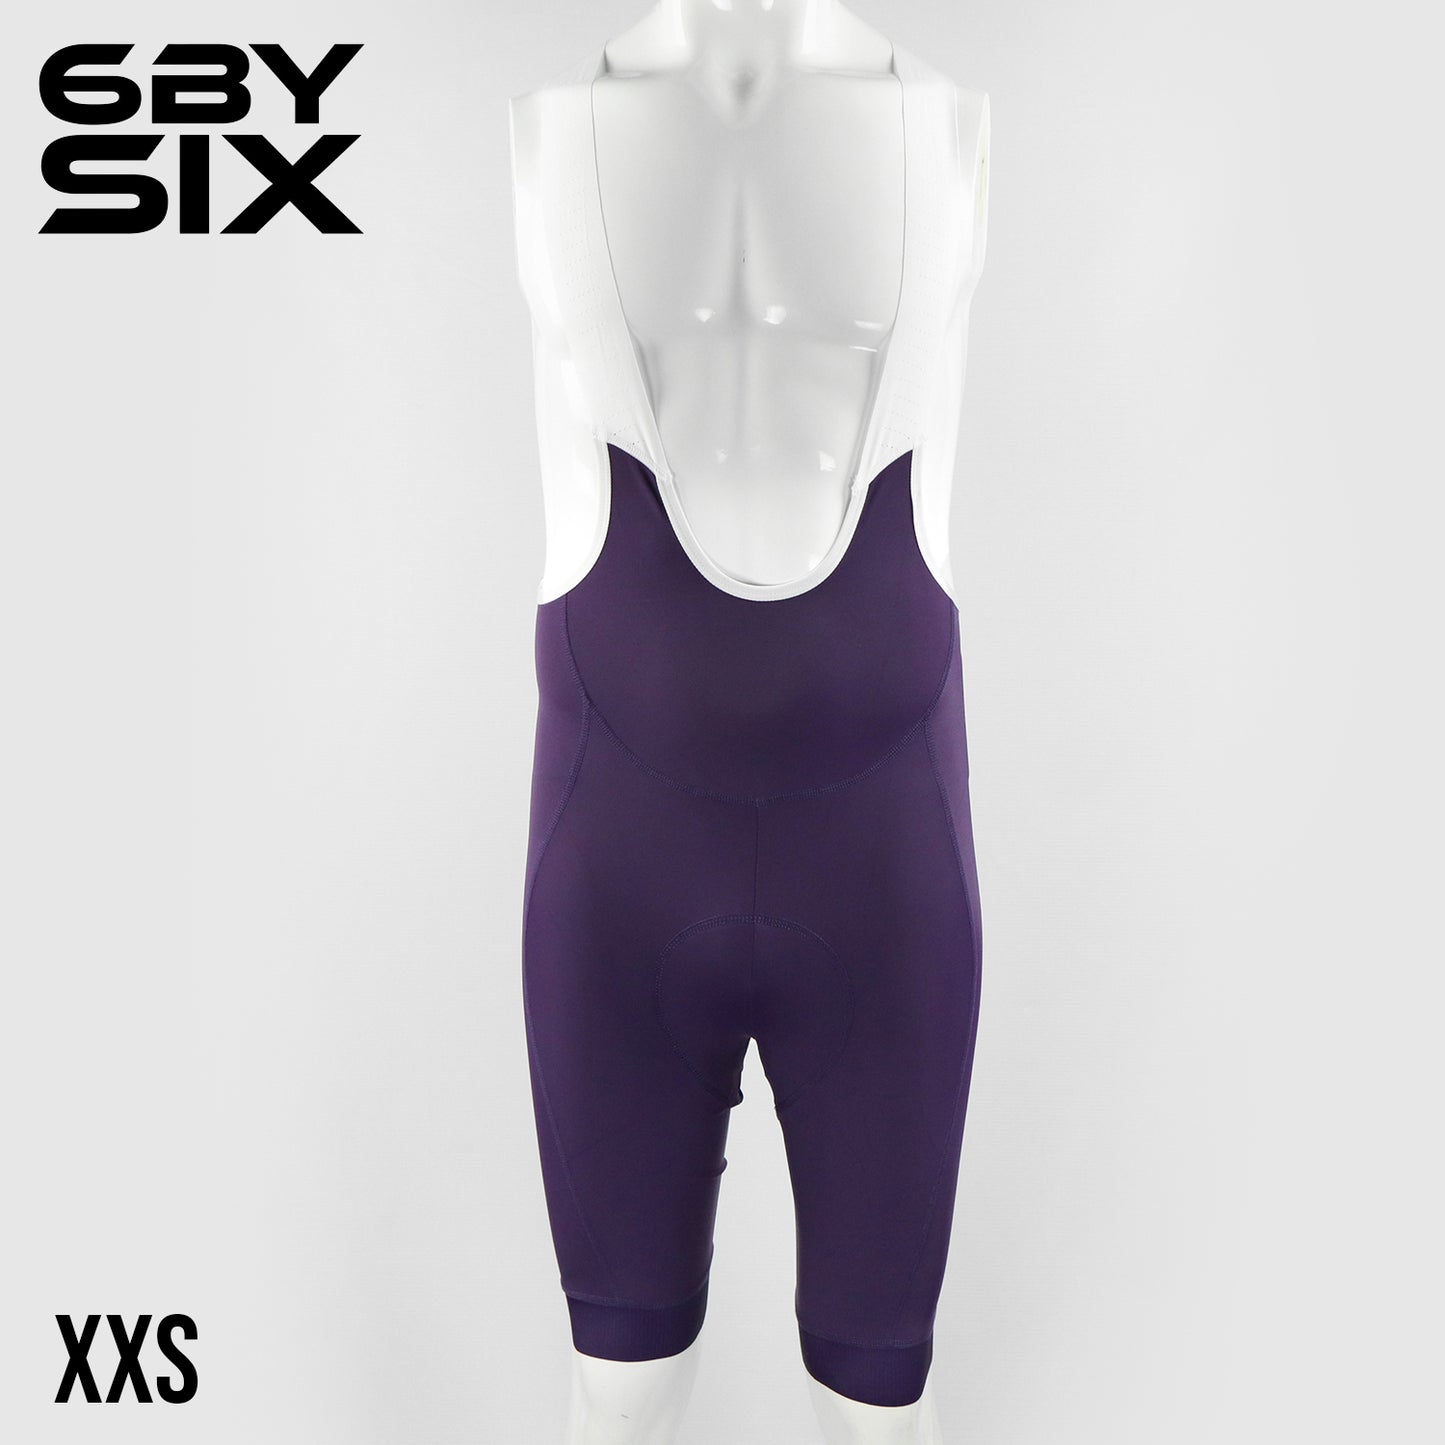 6bySix Adaptive Bib Shorts - Violet